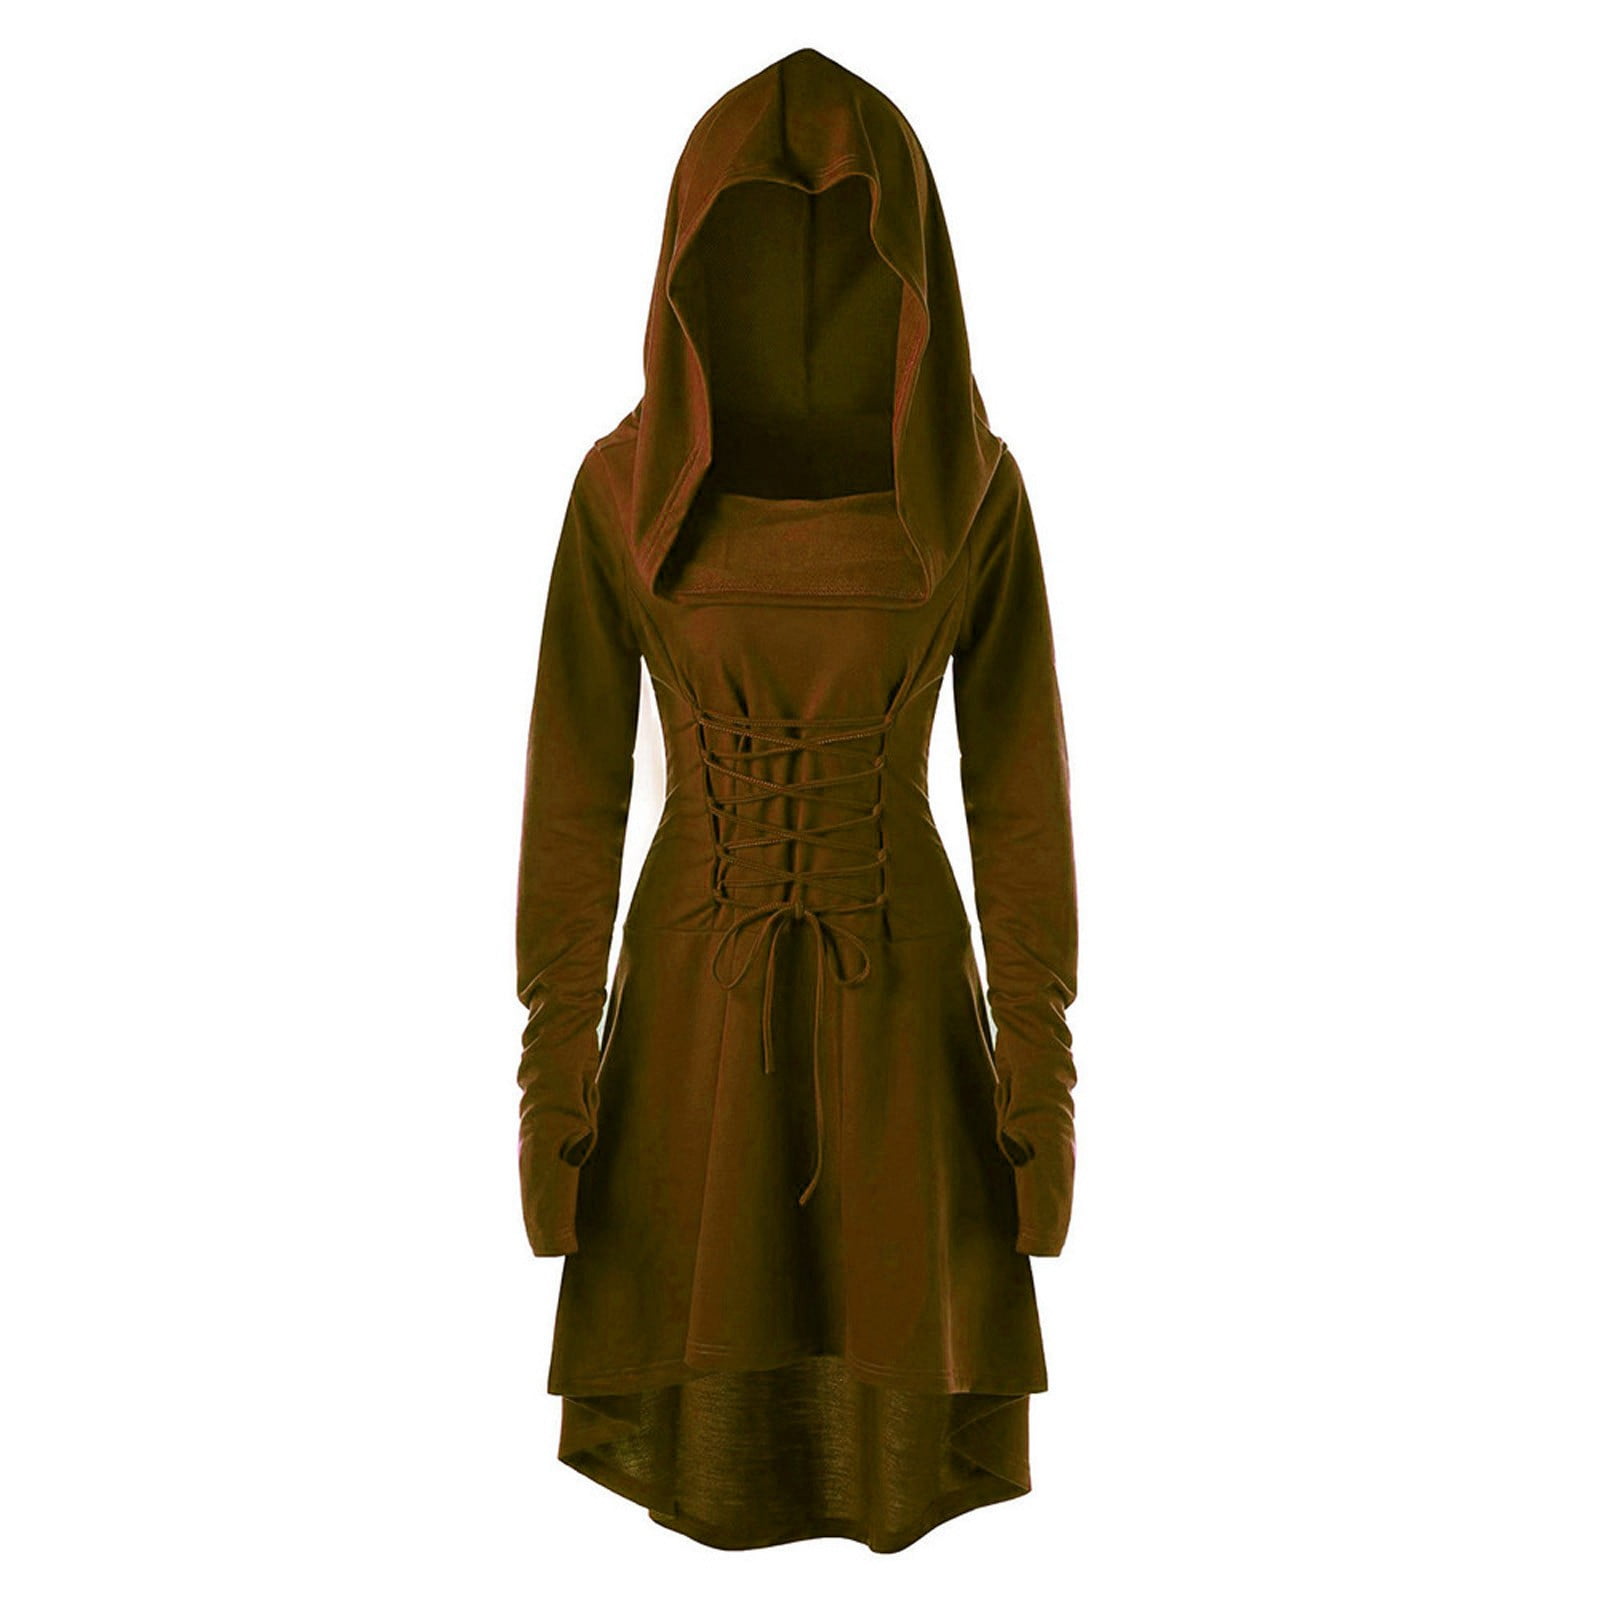 Mrat Womens Gothic Hooded Dress Long Sleeve Medieval Renaissance